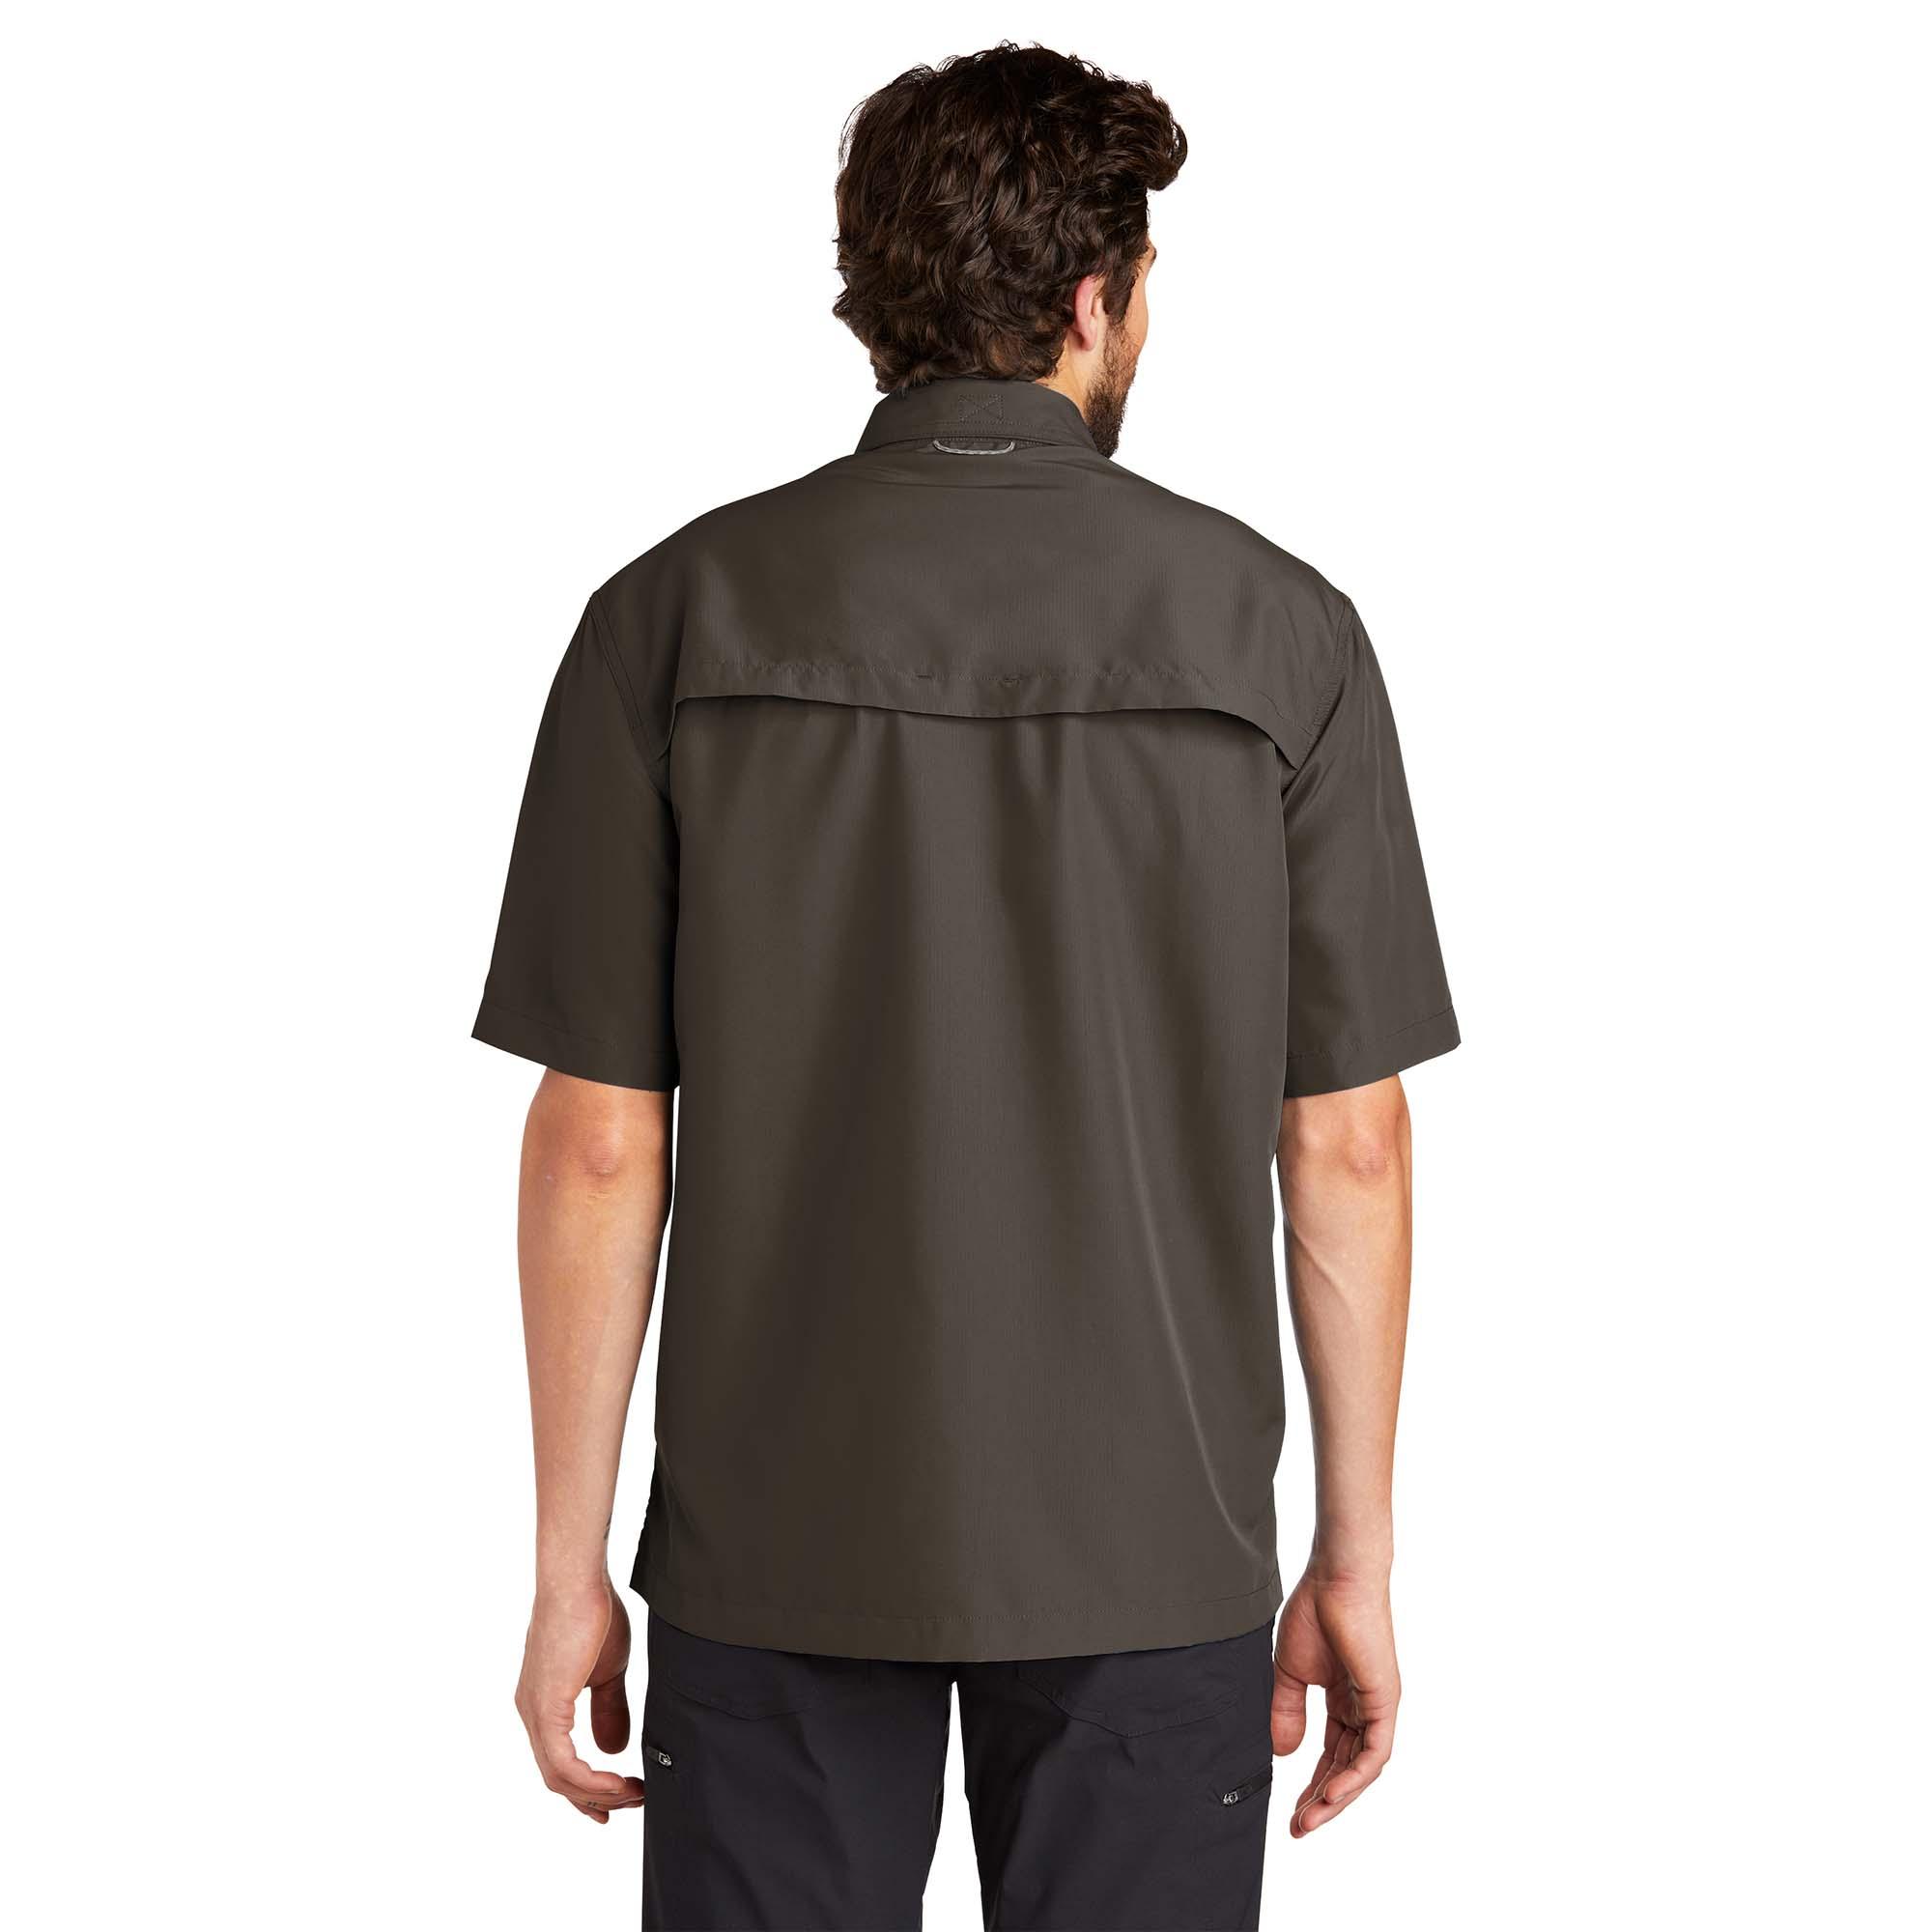 Eddie Bauer EB608 Short Sleeve Fishing Shirt 